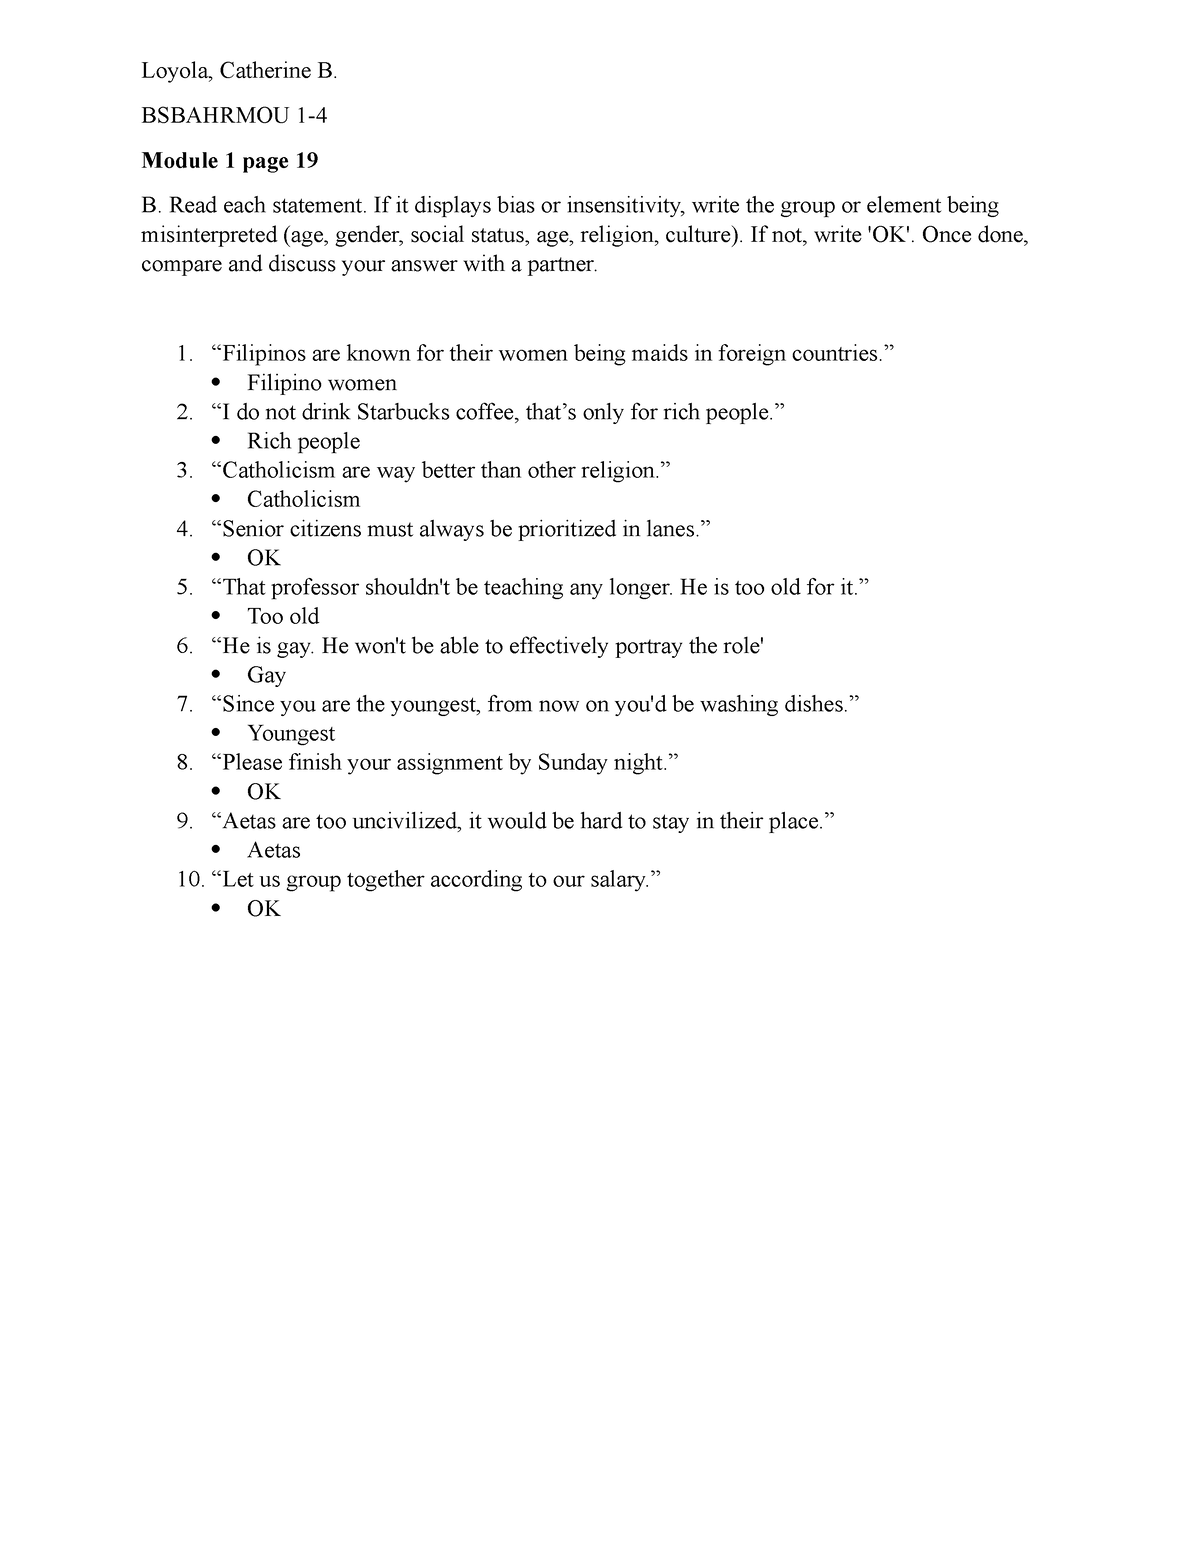 Purcom - Assignment - Loyola, Catherine B. BSBAHRMOU 1- Module 1 page ...